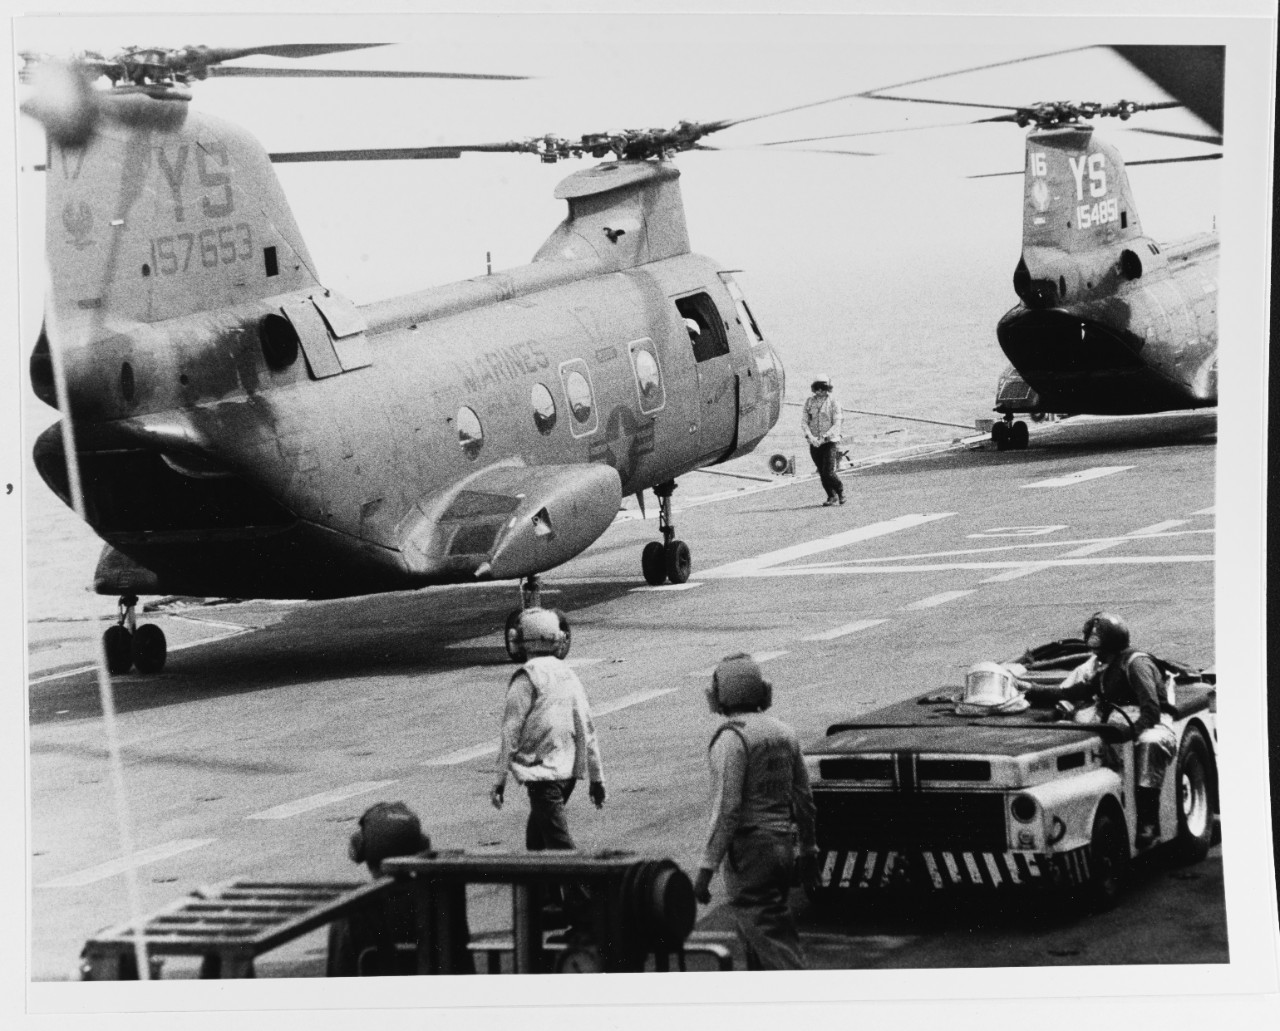 DVIDS - Images - CH-46E Sea Knight on USS Denver's flight deck